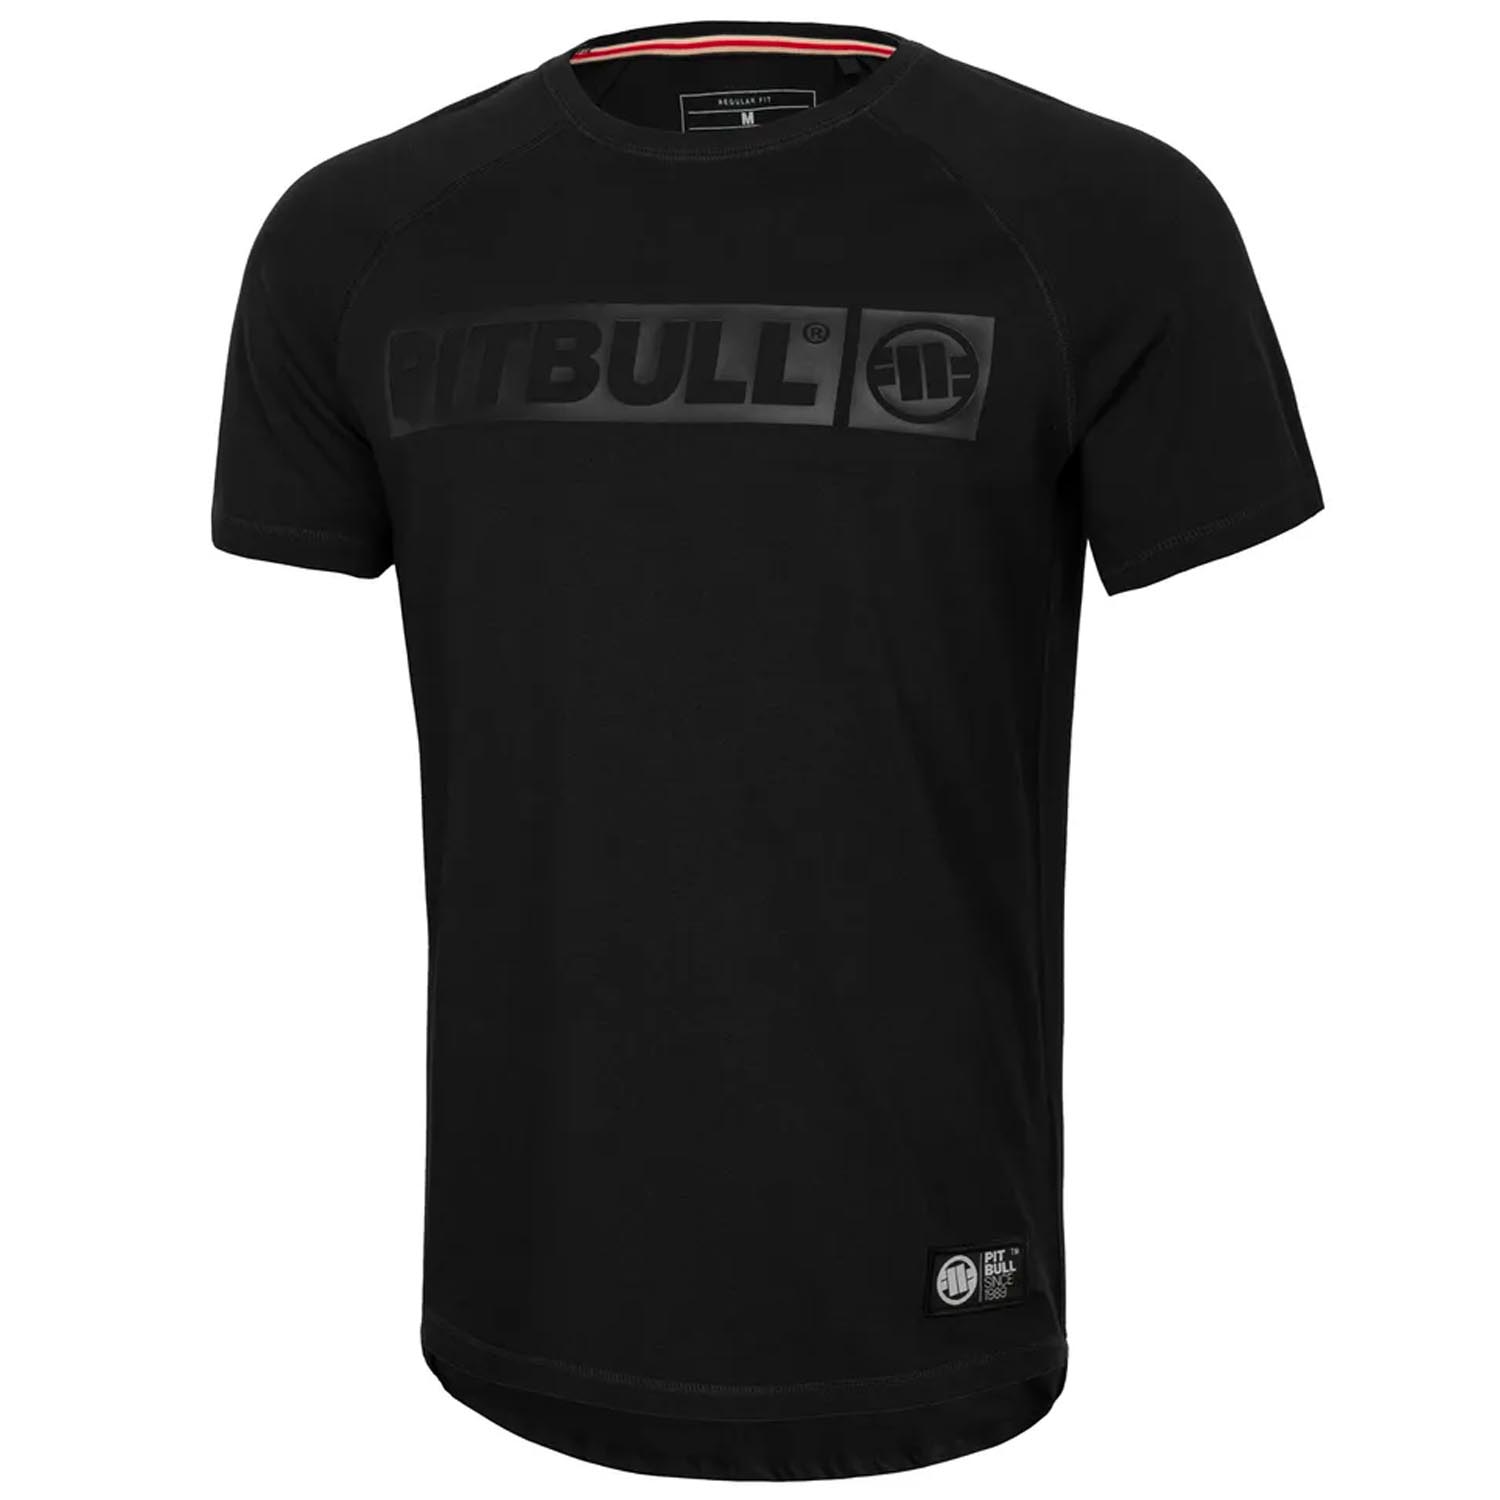 Pit Bull West Coast T-Shirt, Hilltop 210 Spandex, black-black